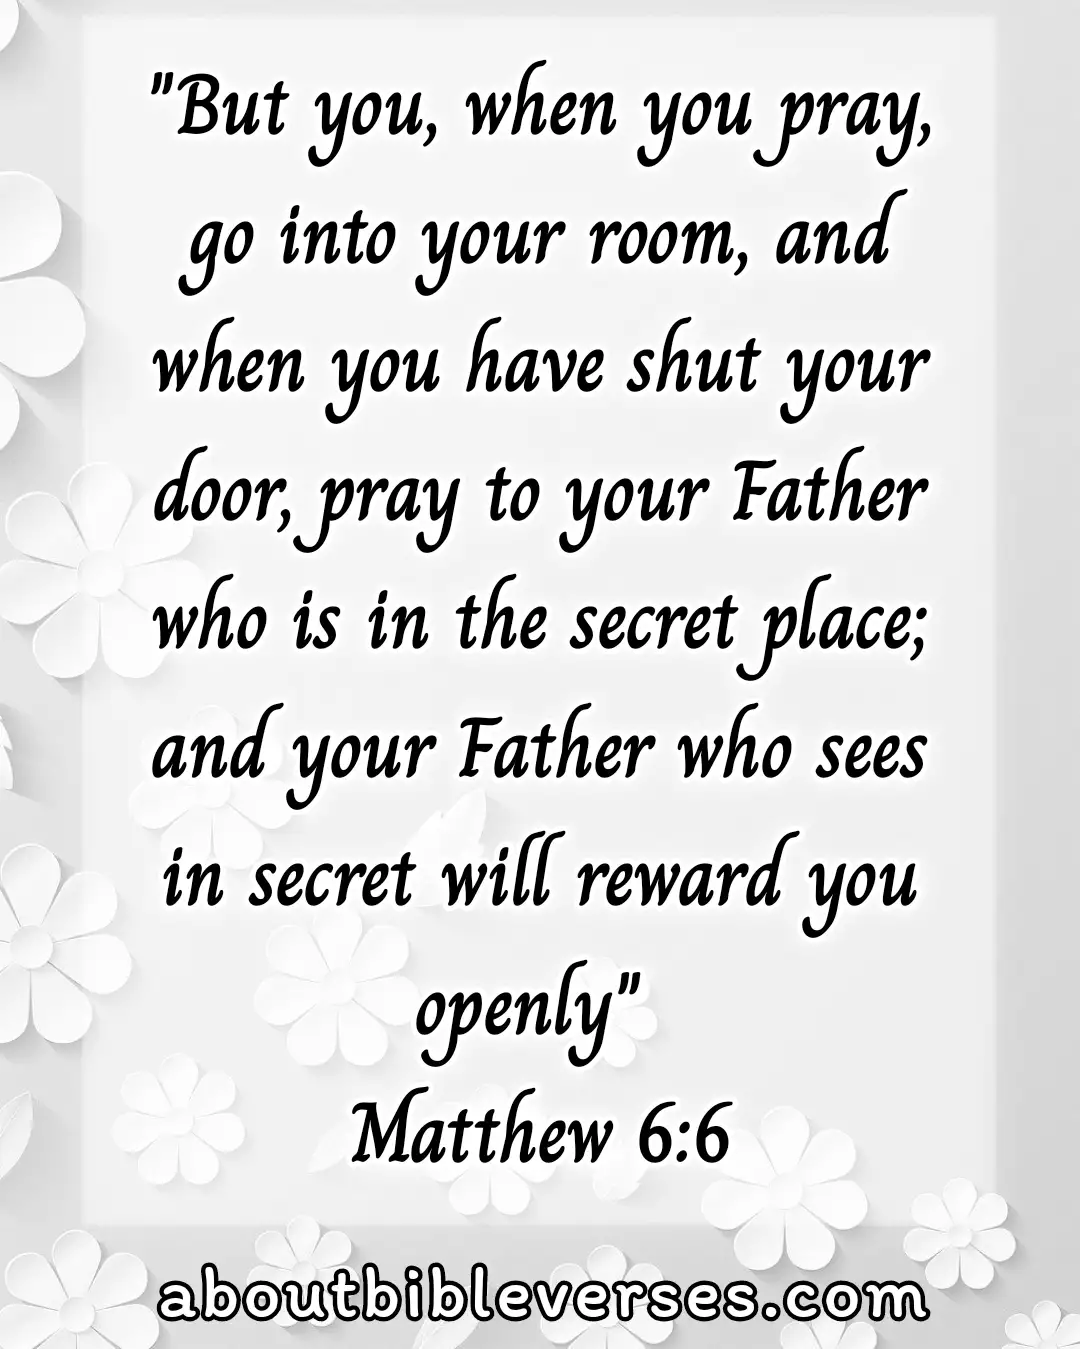 Bible Verses About Praying With Wrong Motive (Matthew 6:6)